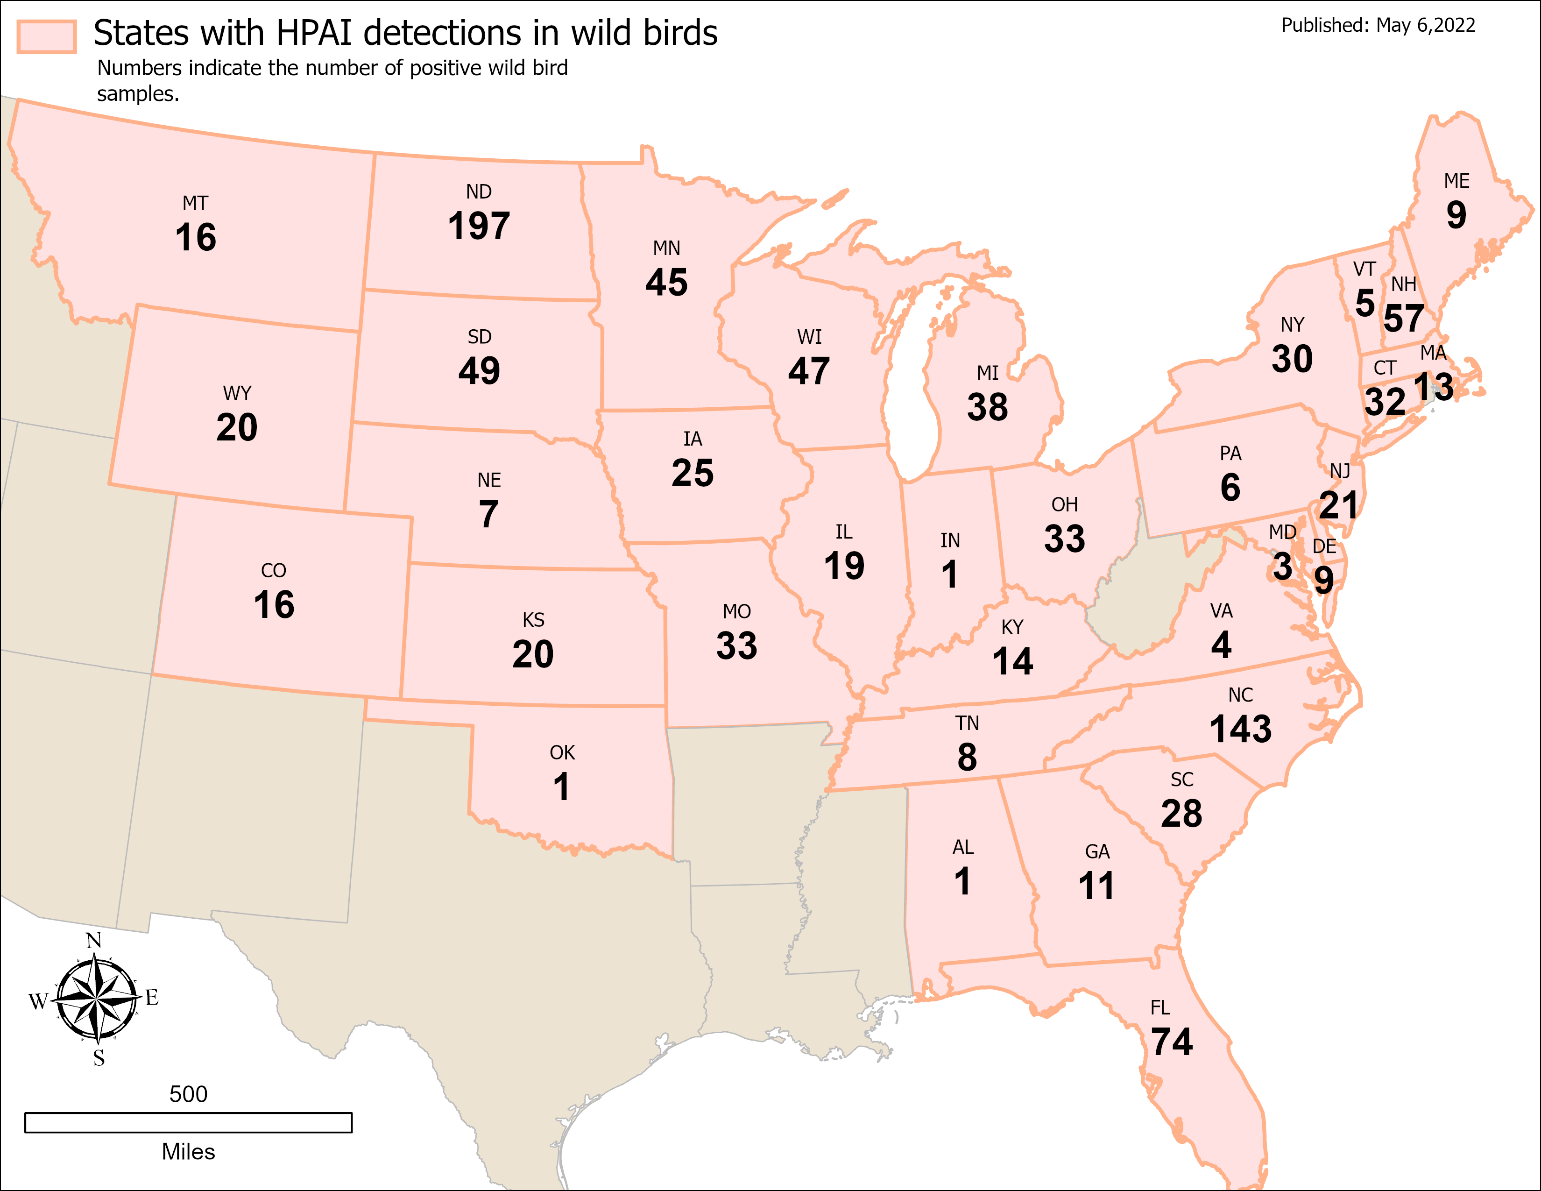 Flu Map